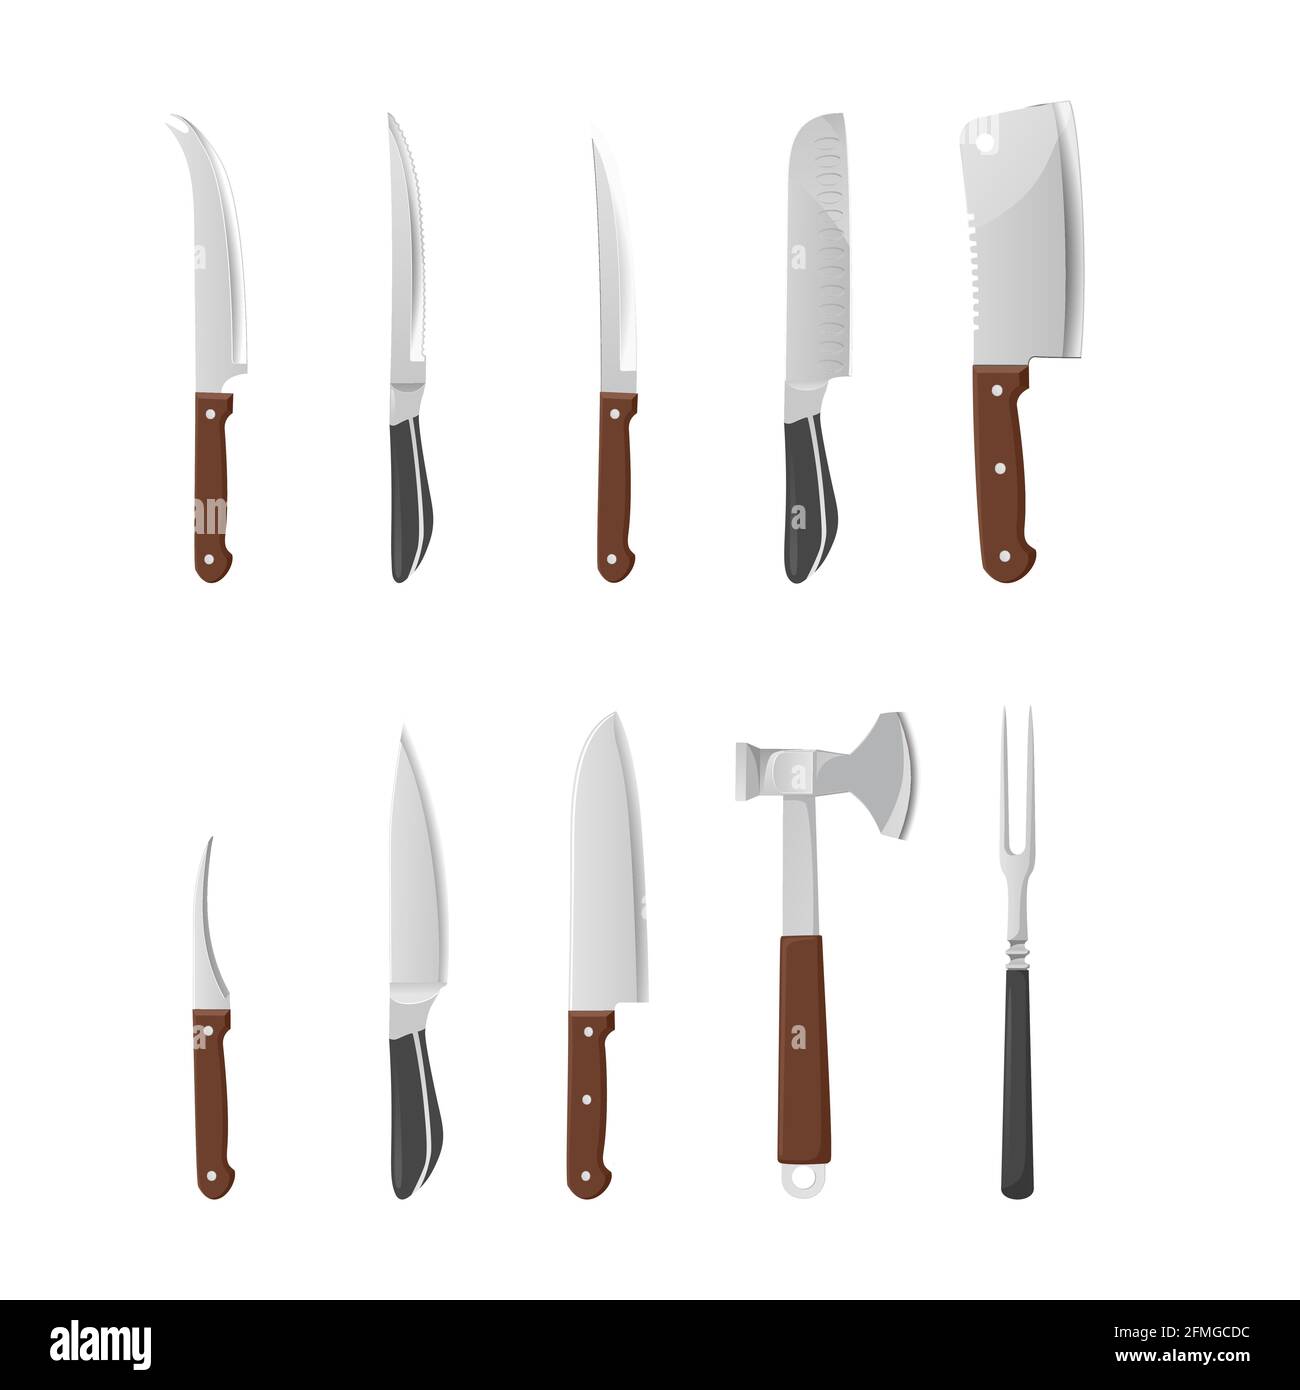 https://c8.alamy.com/comp/2FMGCDC/set-of-kitchen-and-cooking-tools-restaurant-bbq-meat-knives-icons-vintage-design-elements-for-logo-poster-emblem-vector-illustration-2FMGCDC.jpg